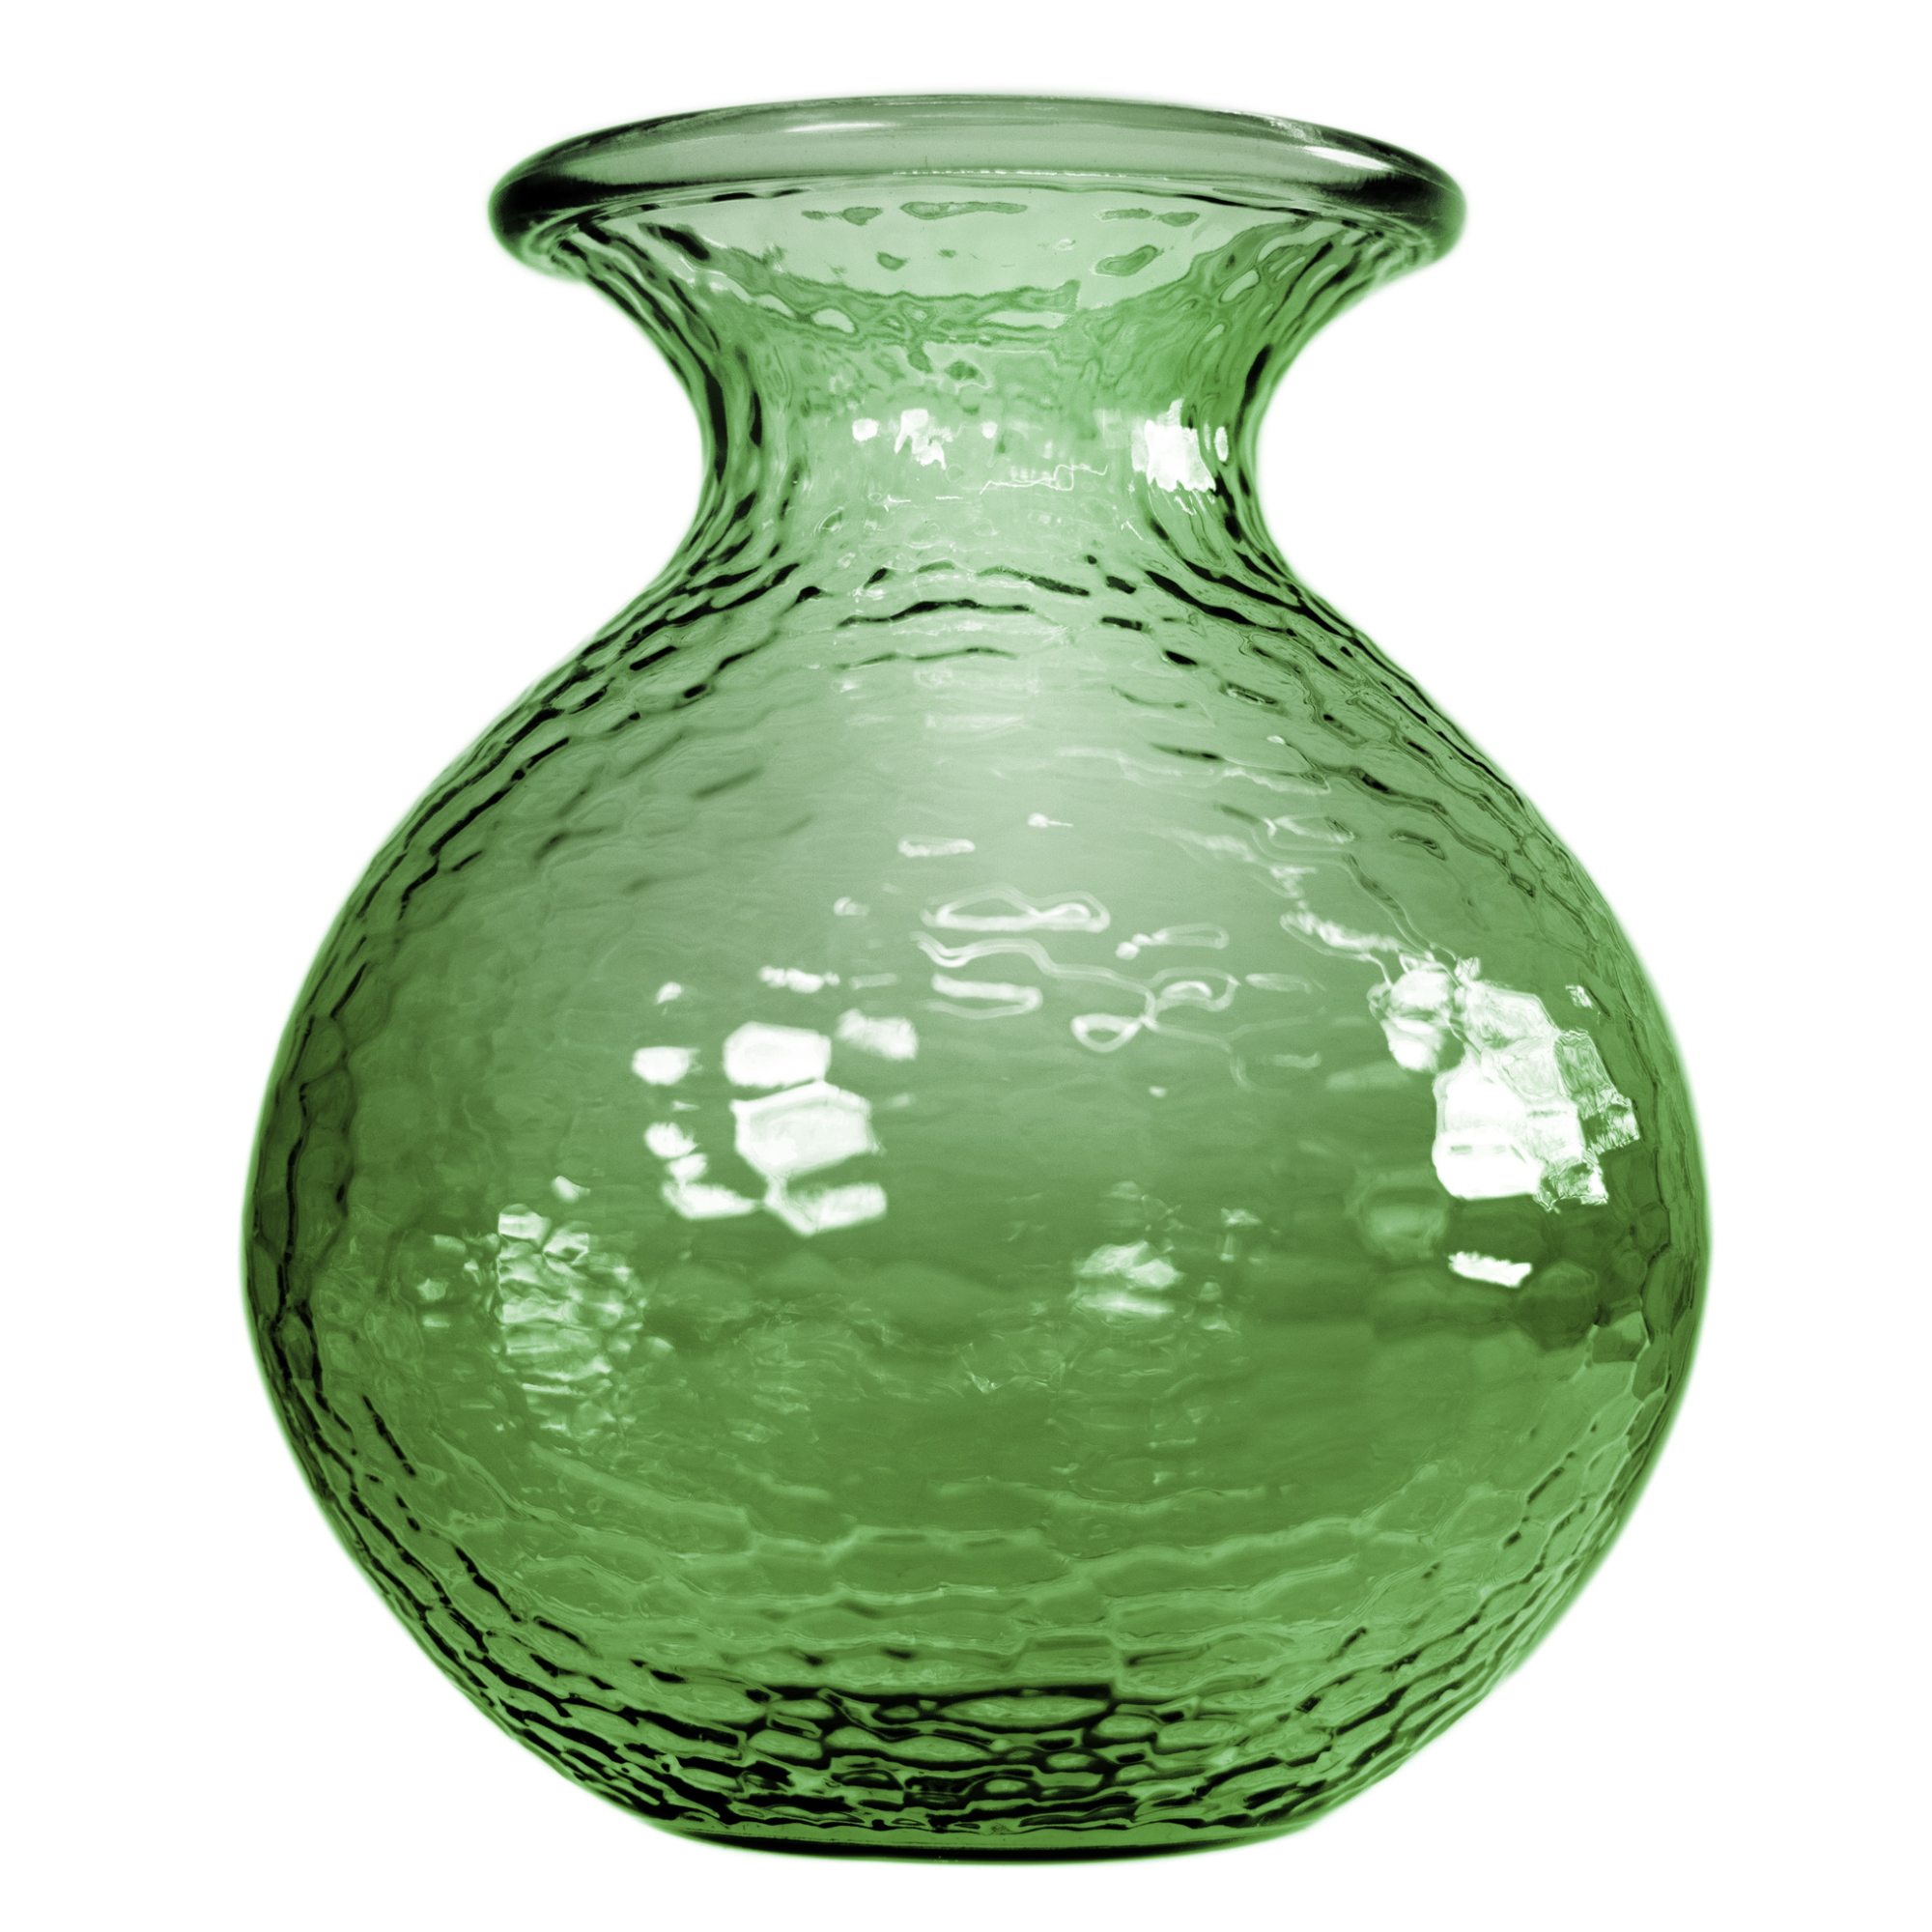 Ваза San miguel Paradise зелёный 33 см ваза san miguel enea зелёная 33 см